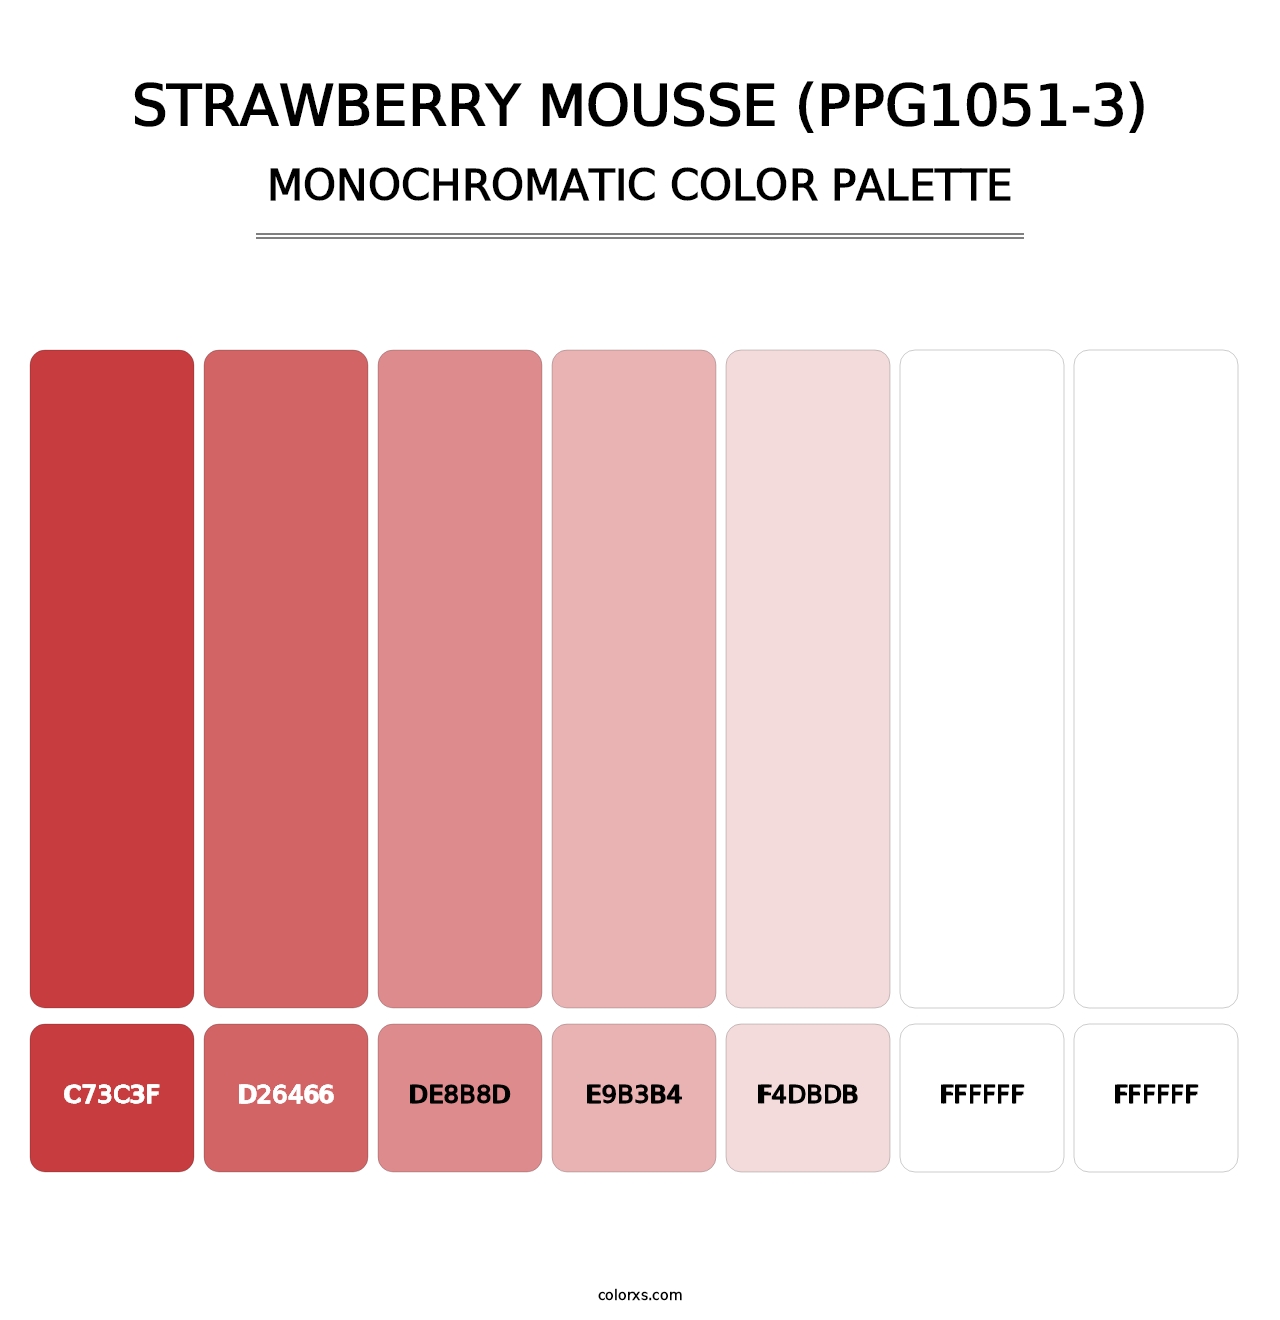 Strawberry Mousse (PPG1051-3) - Monochromatic Color Palette